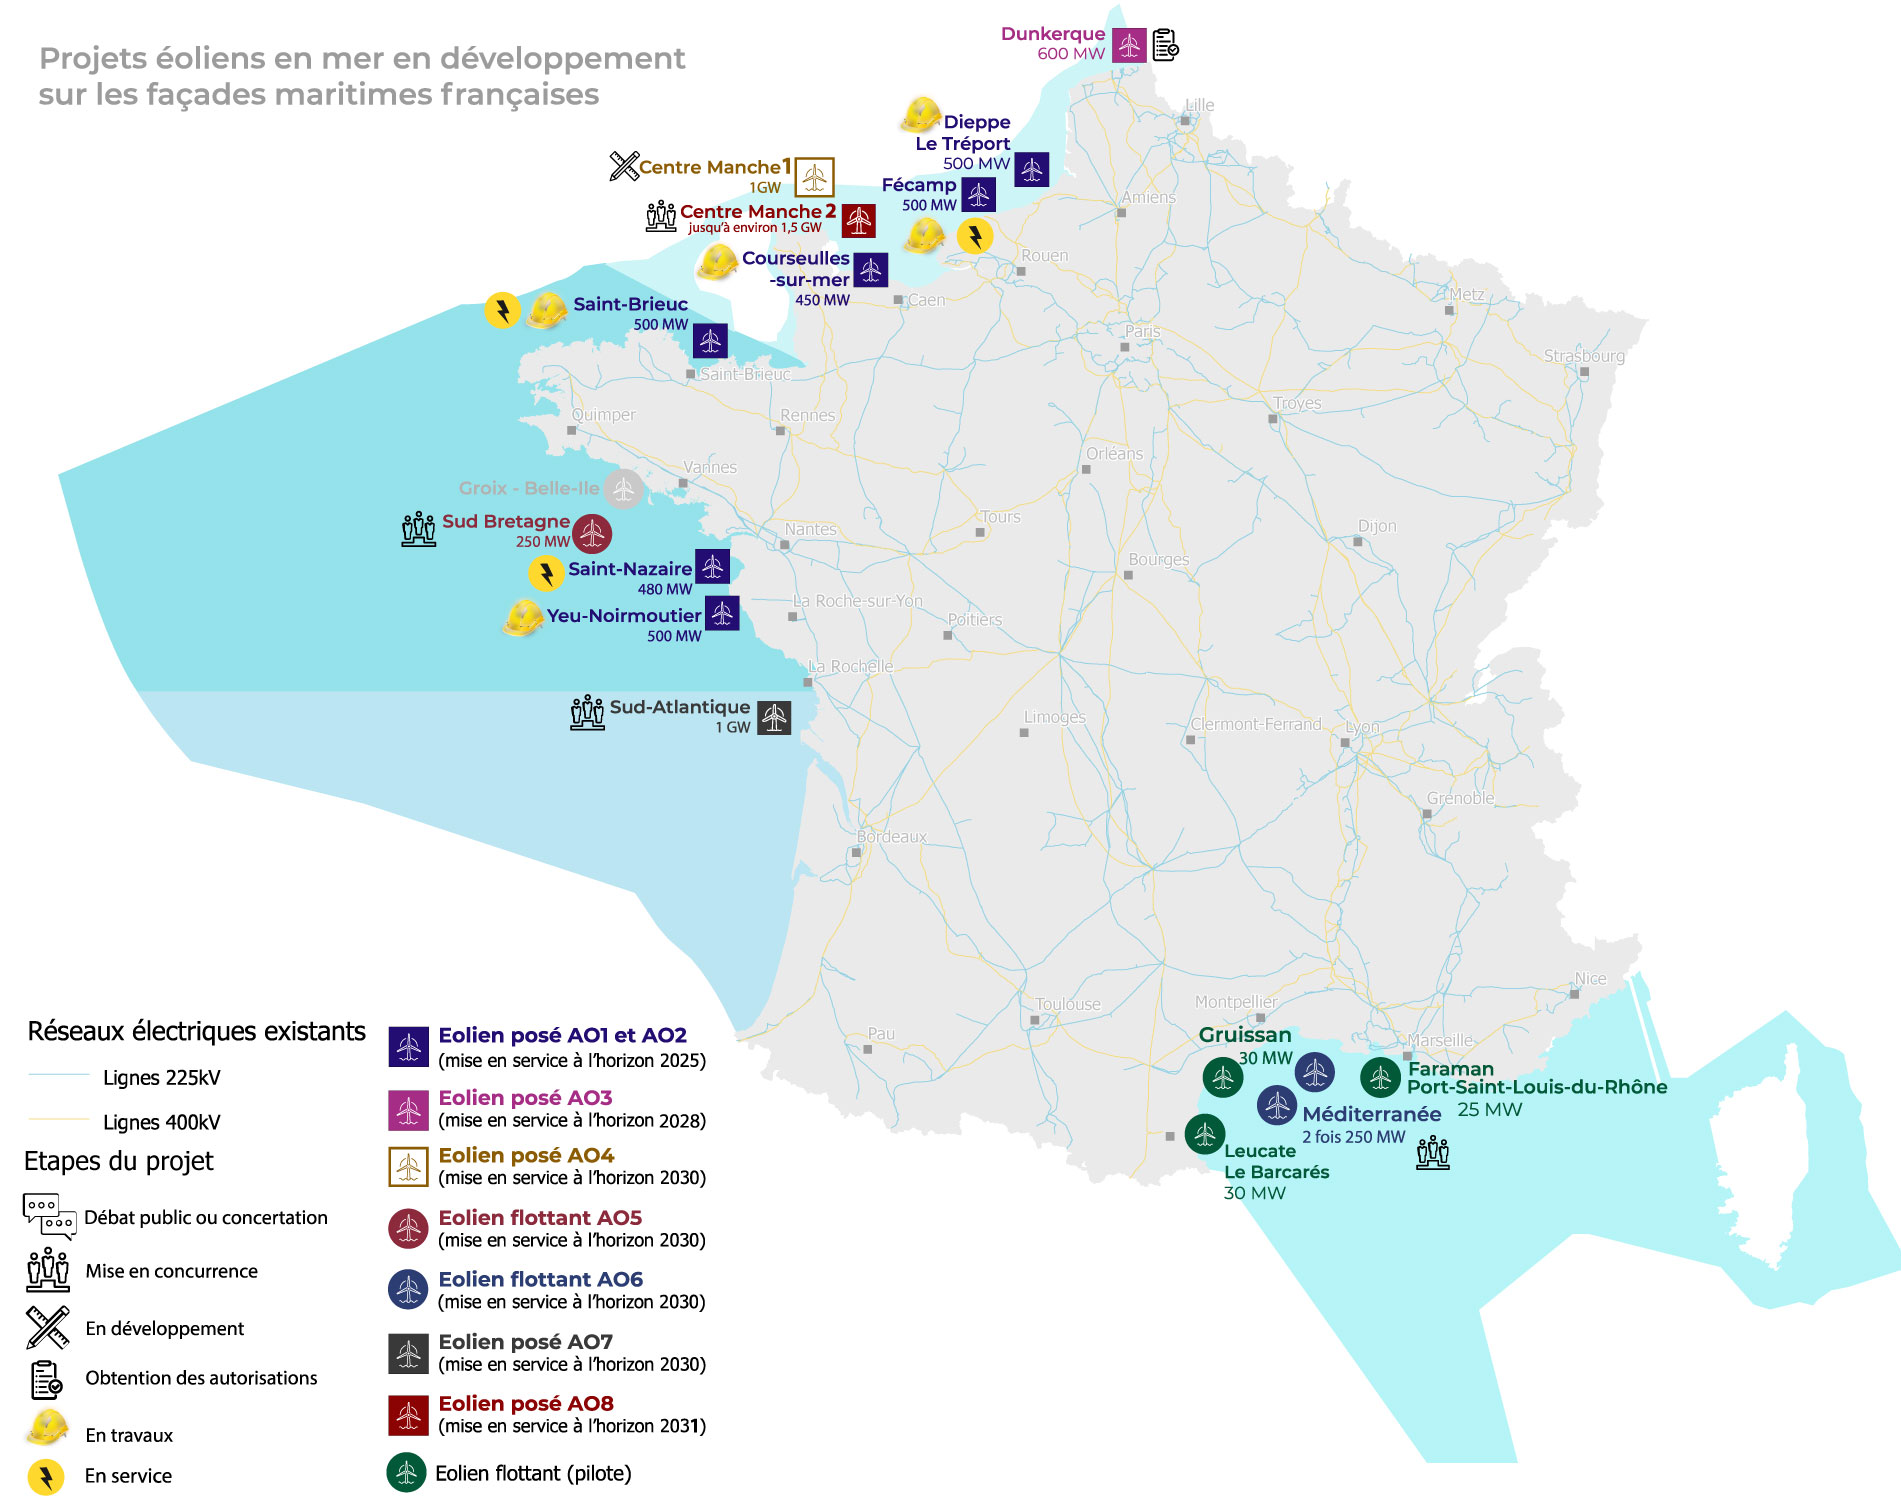 Carte des projets éoliens en mer en France